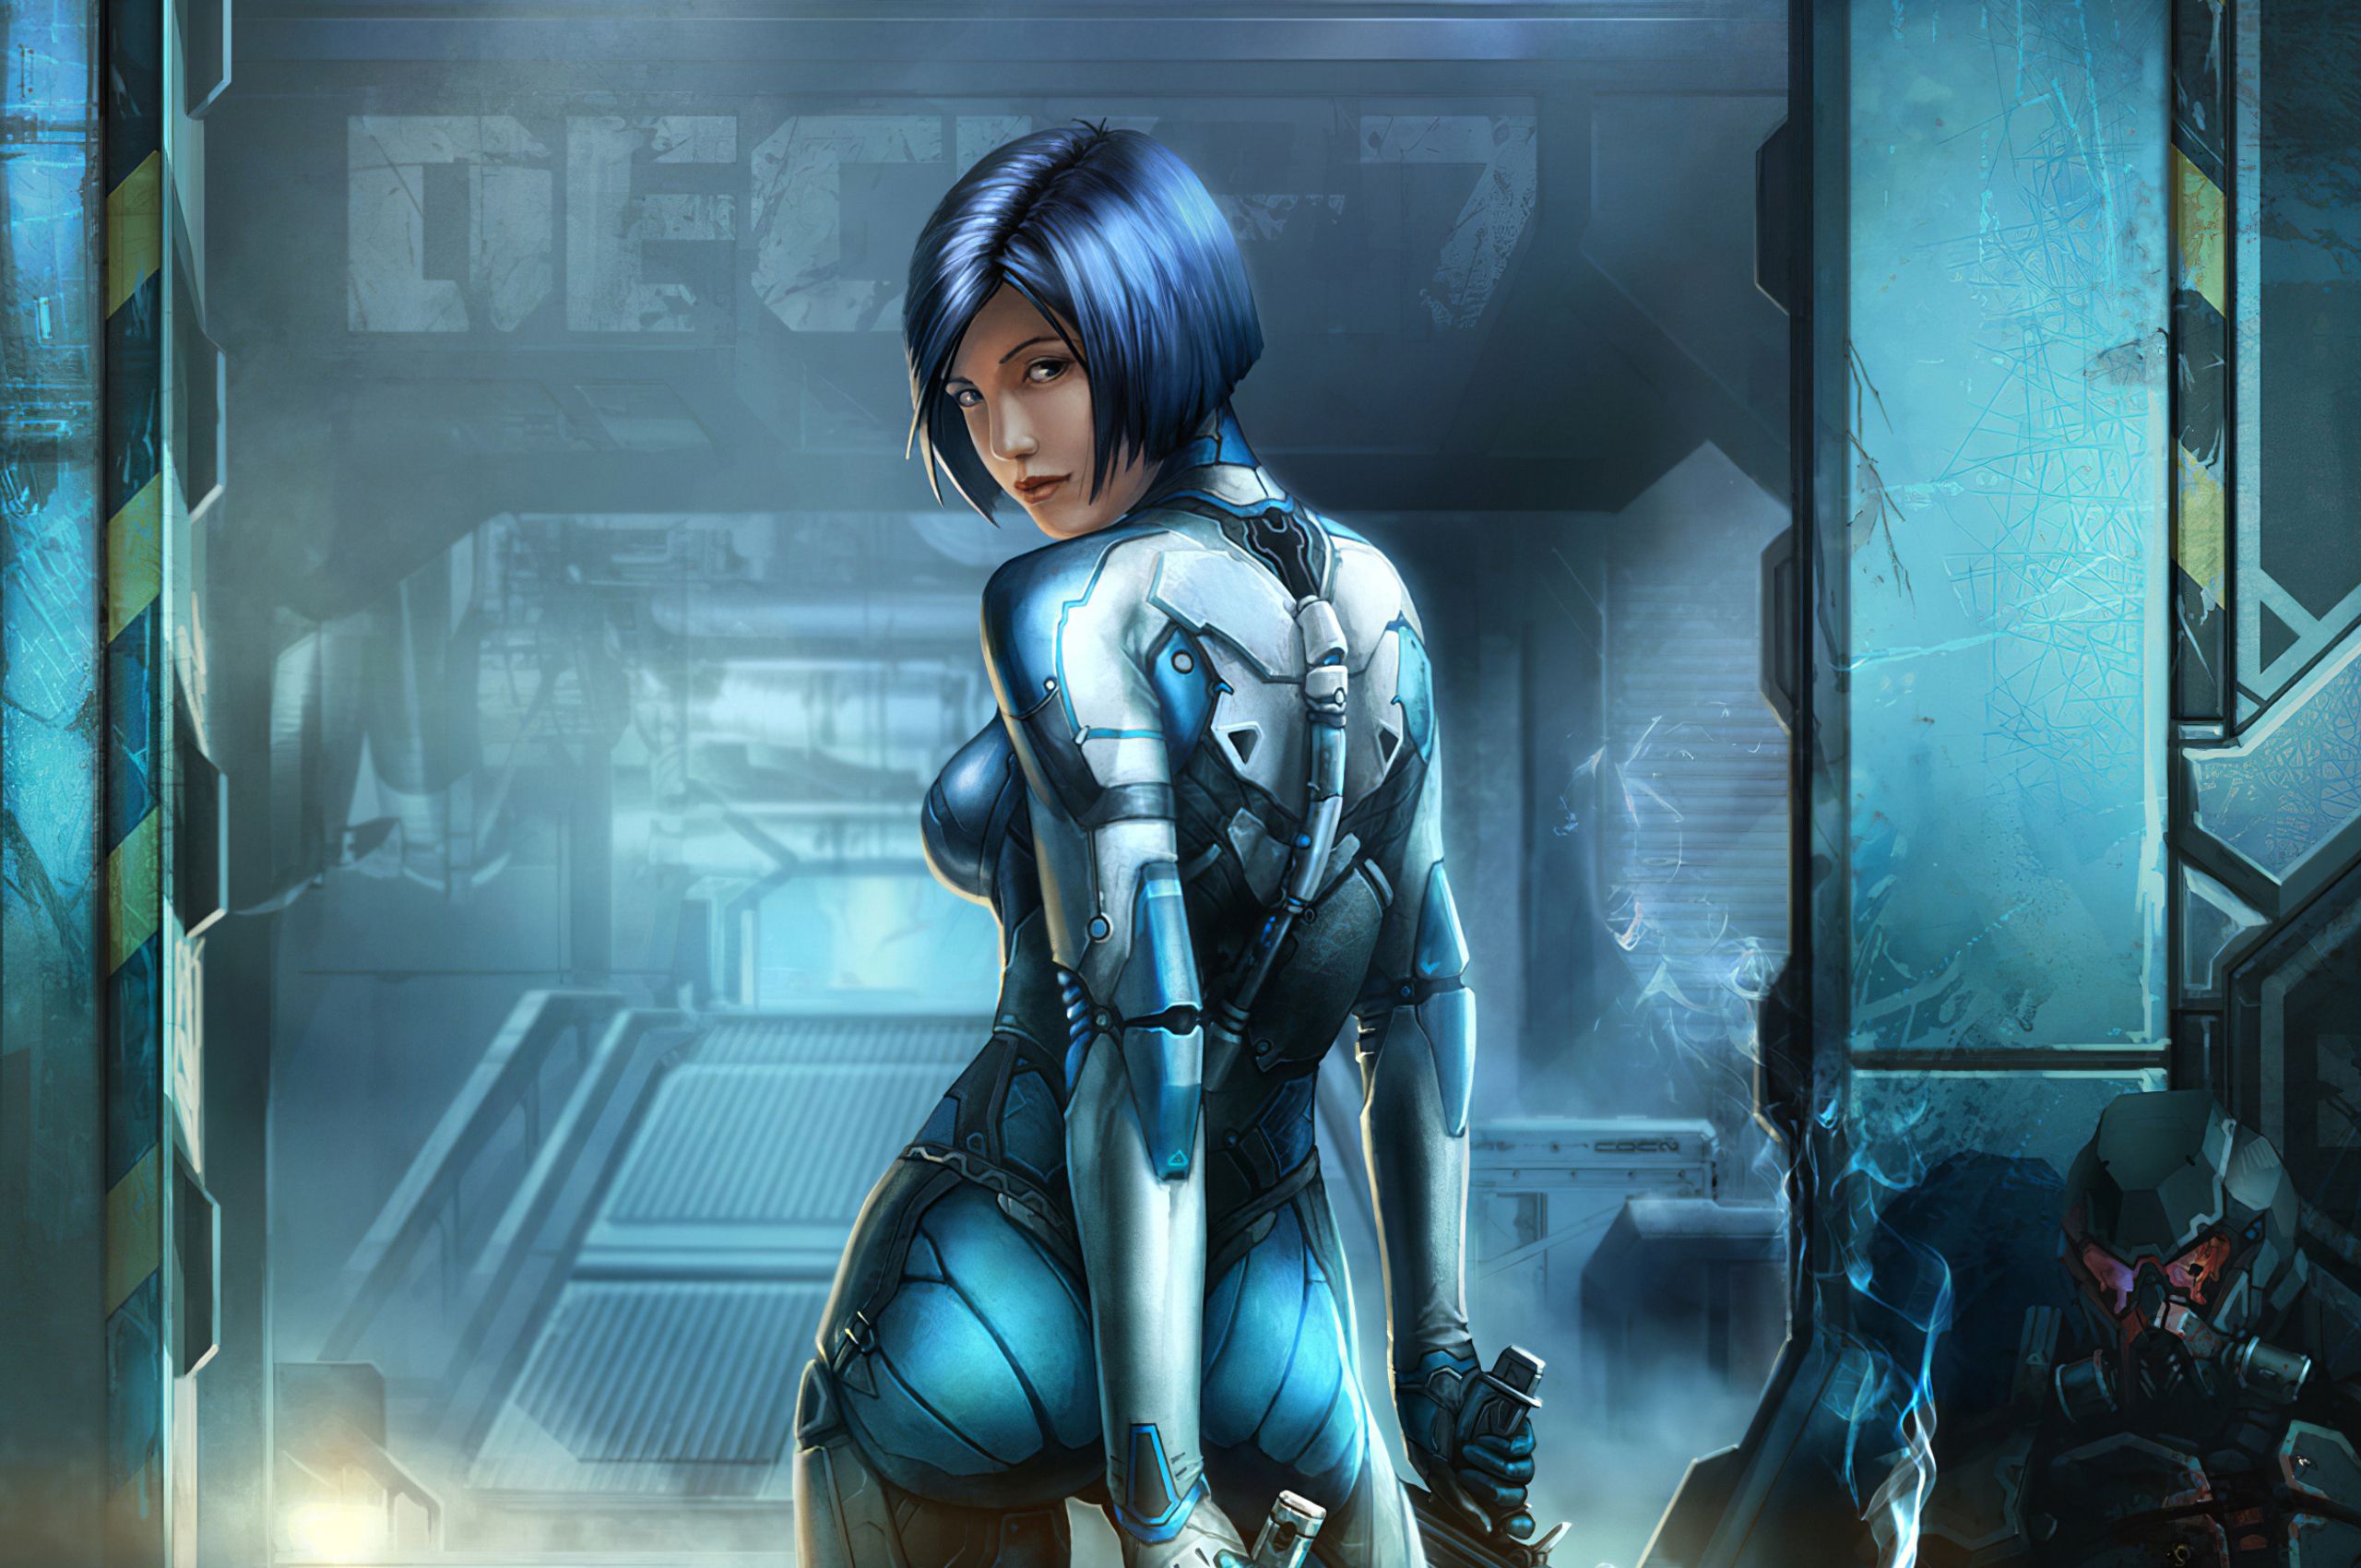 Blue Cyberpunk Cyborg Girl Chromebook Pixel HD 4k Wallpaper, Image, Background, Photo and Picture